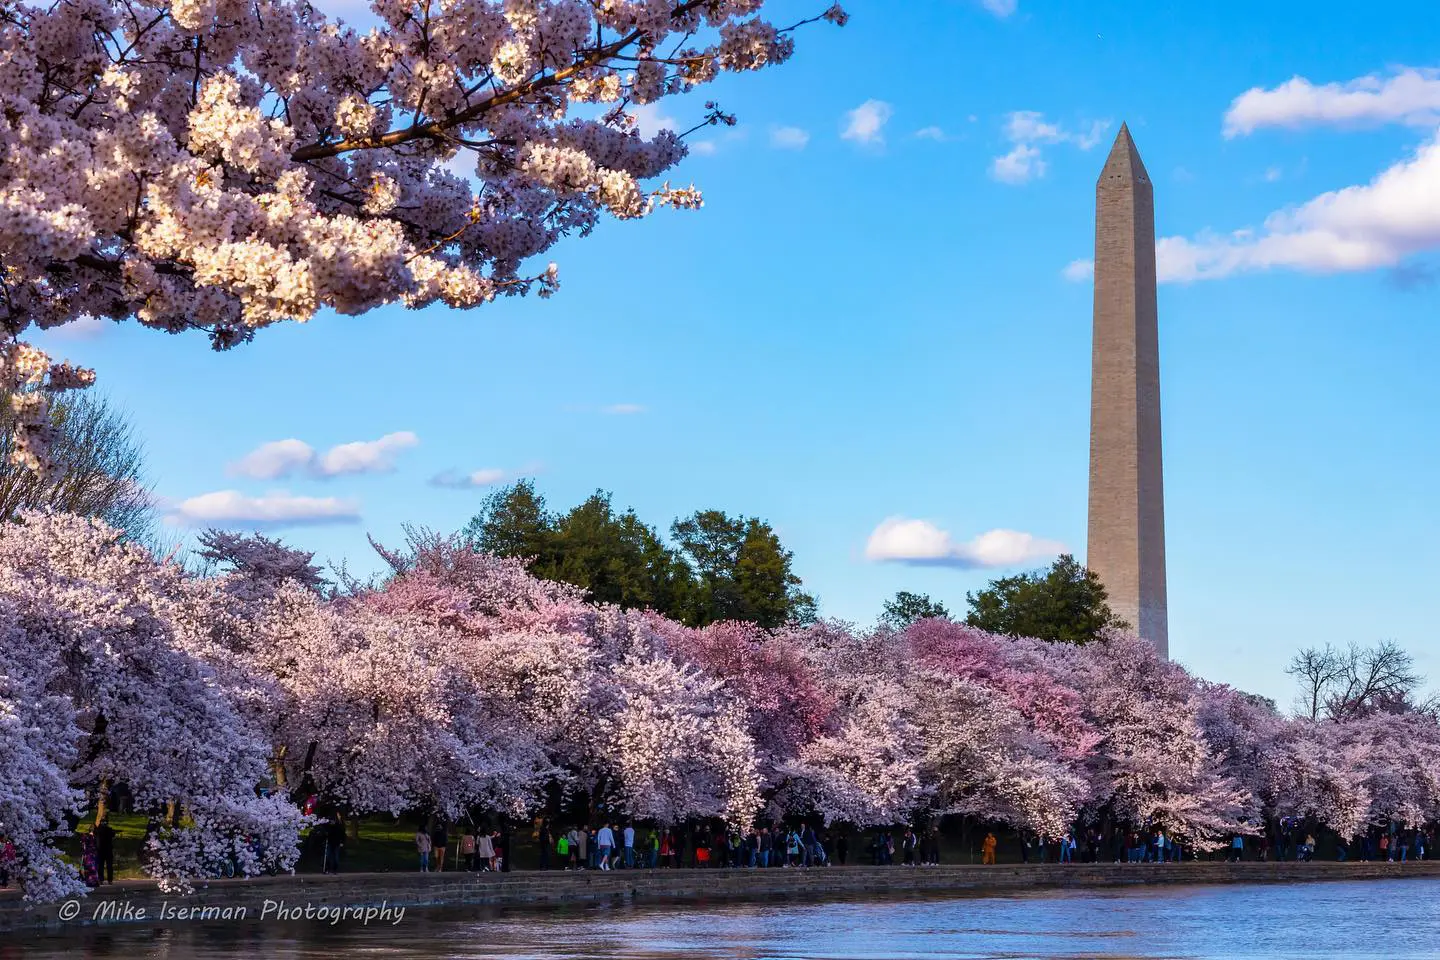 national cherry blossom